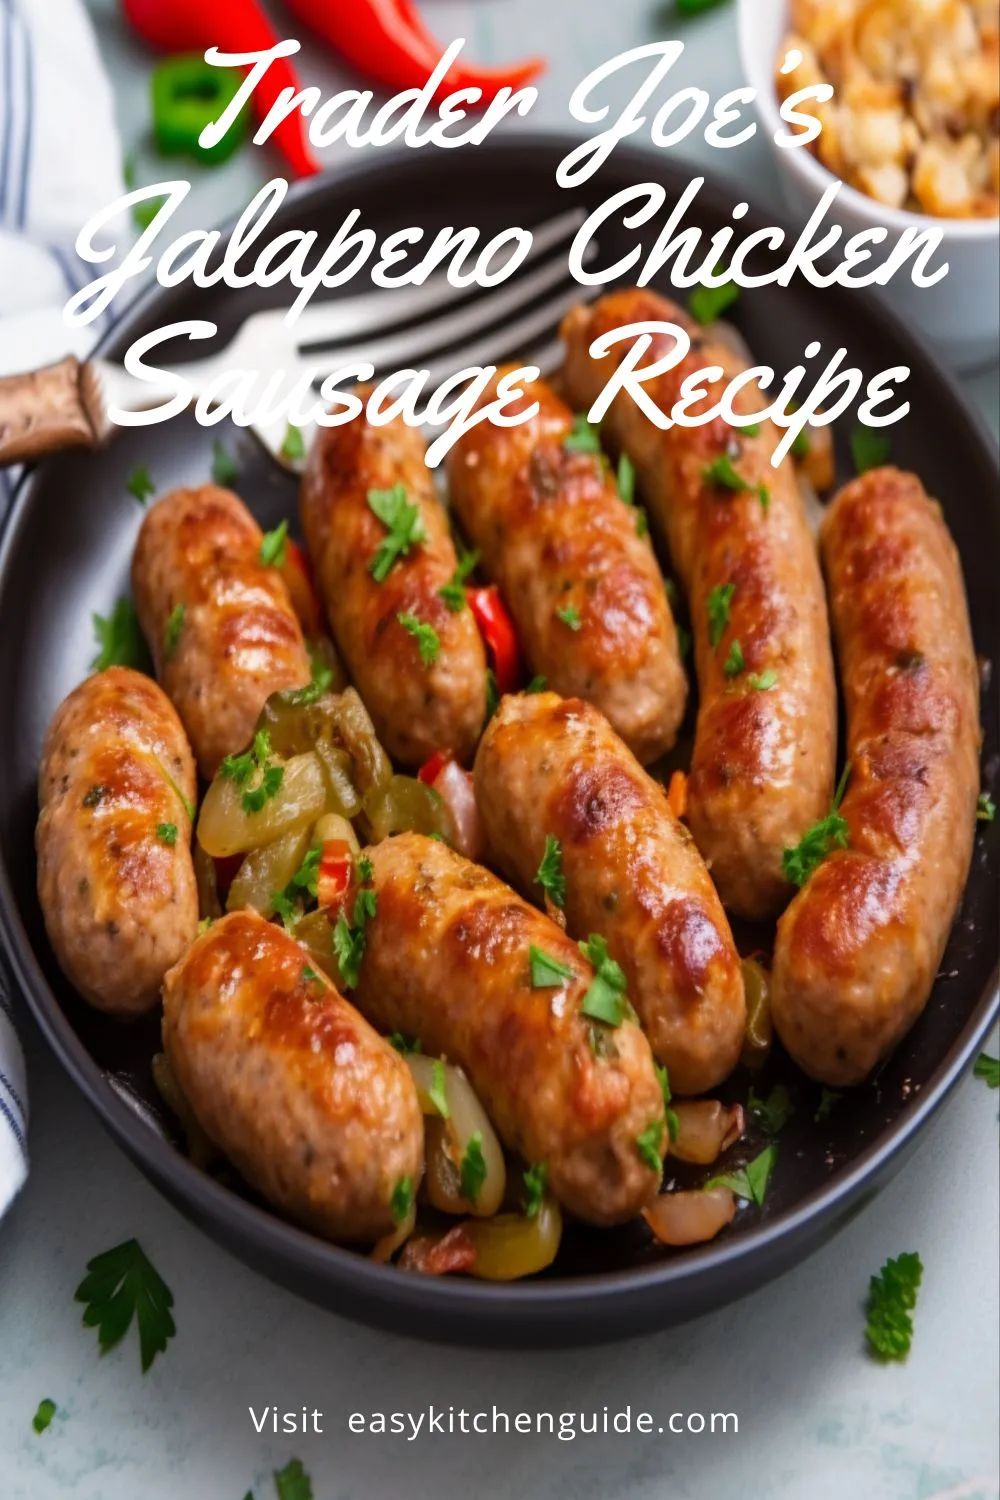 Trader Joe’s Jalapeno Chicken Sausage Recipe